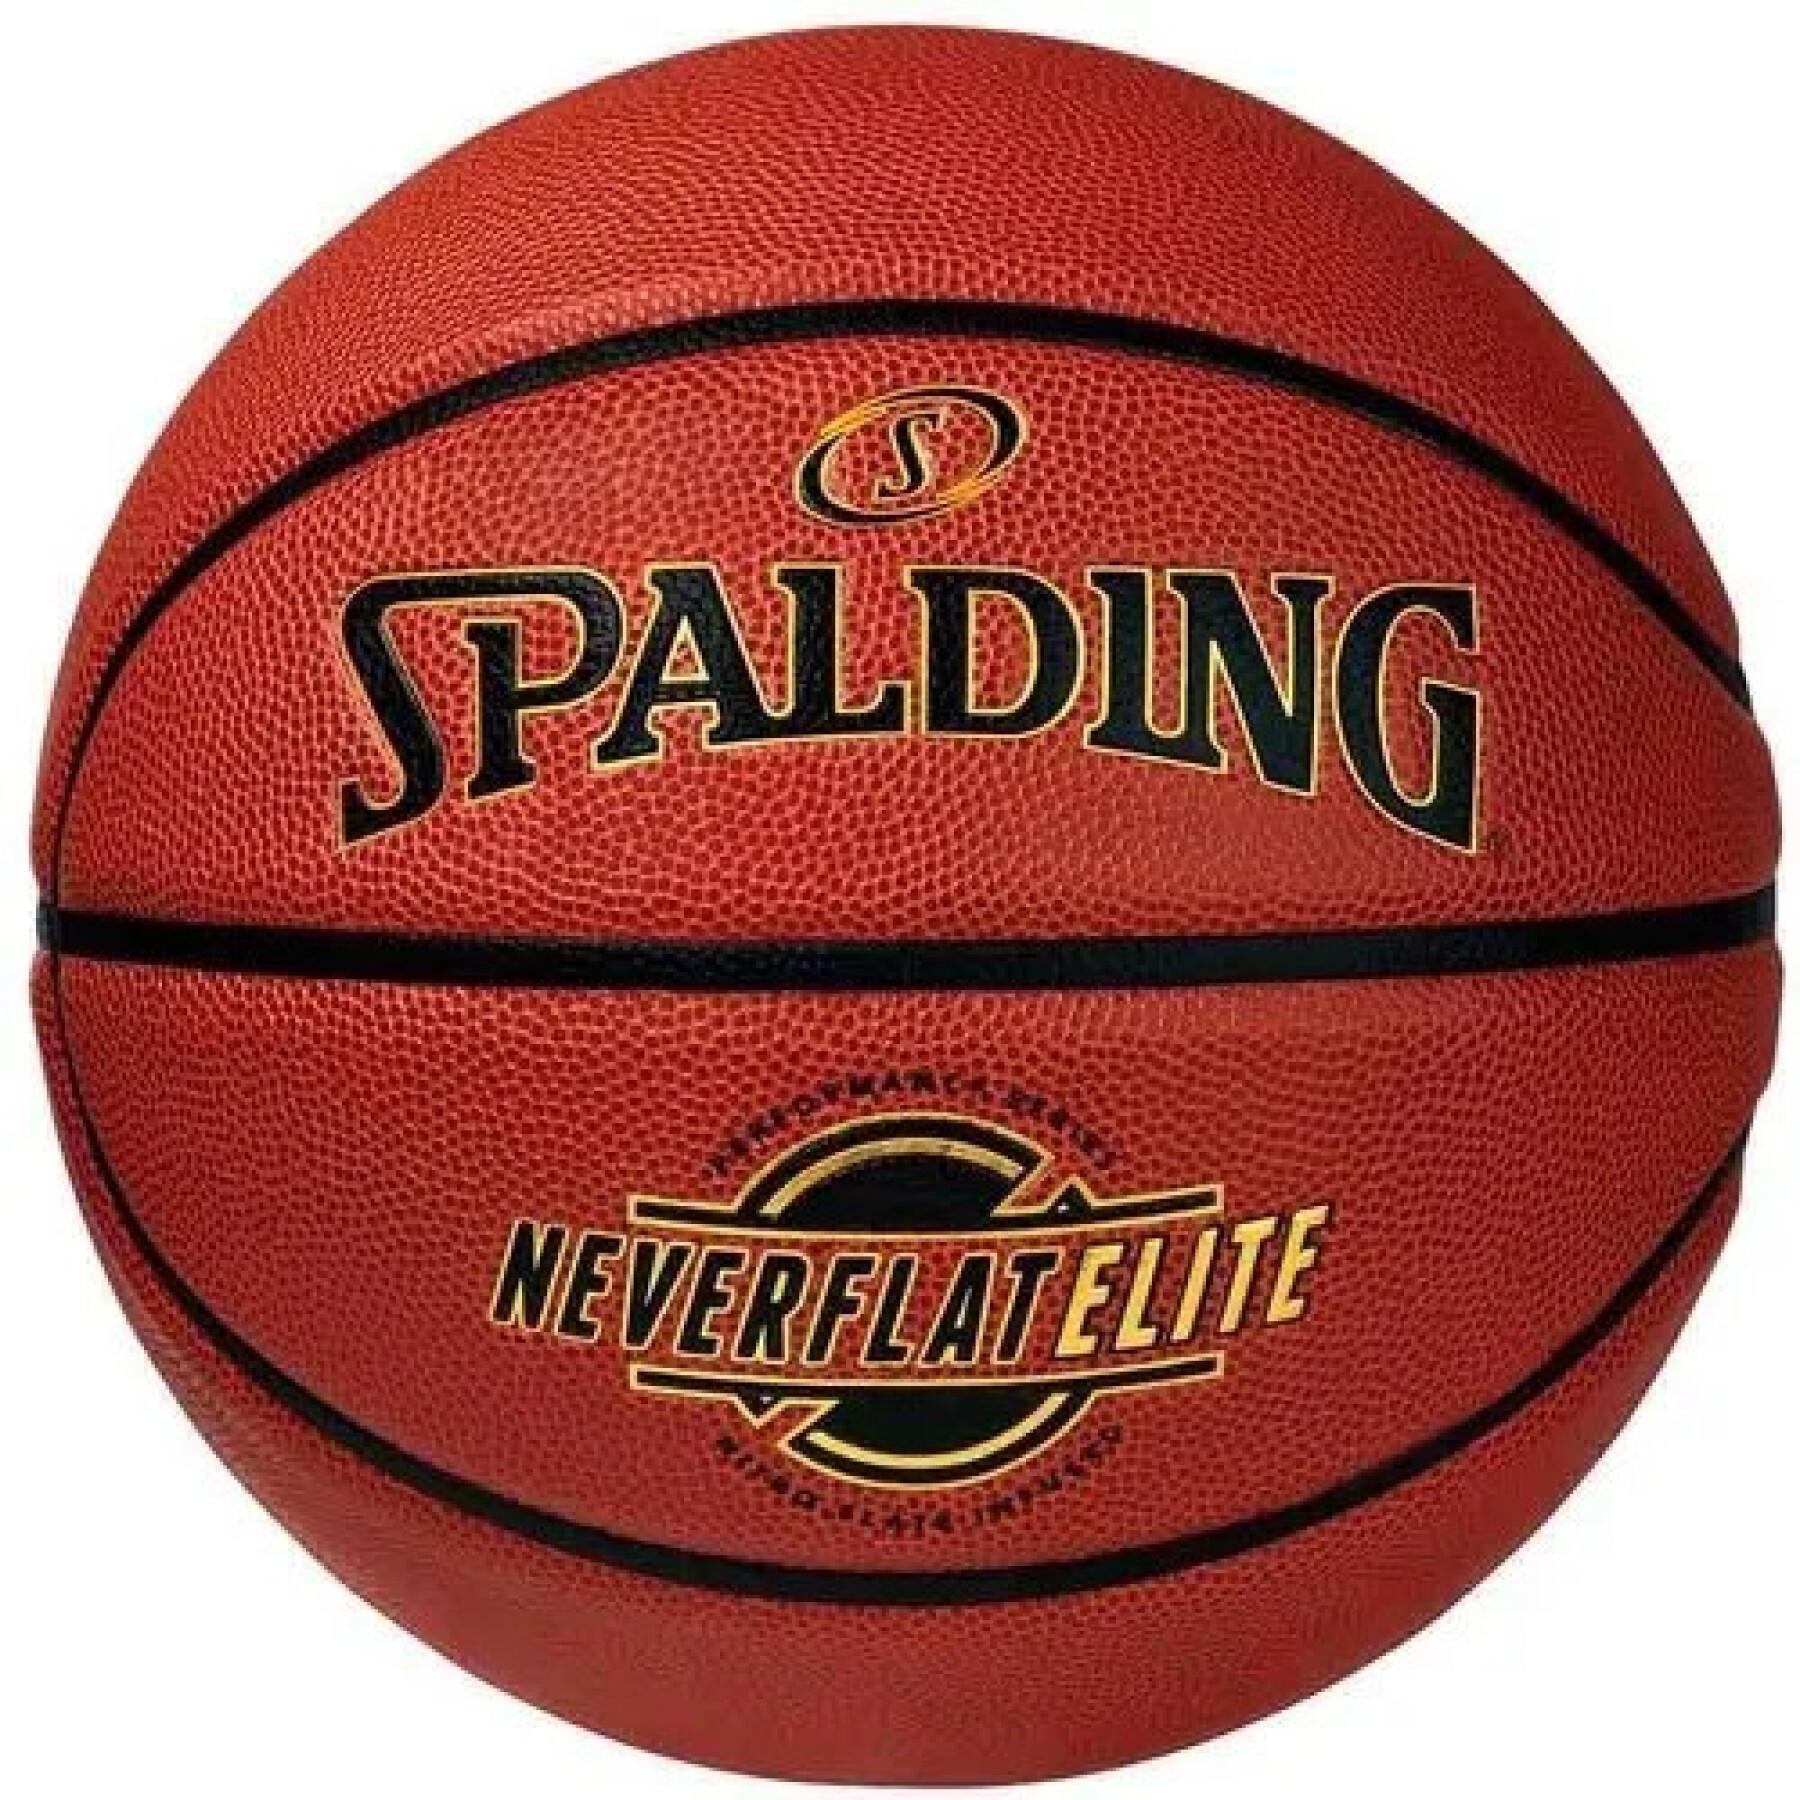 Ballong Spalding NeverFlat Elite Composite